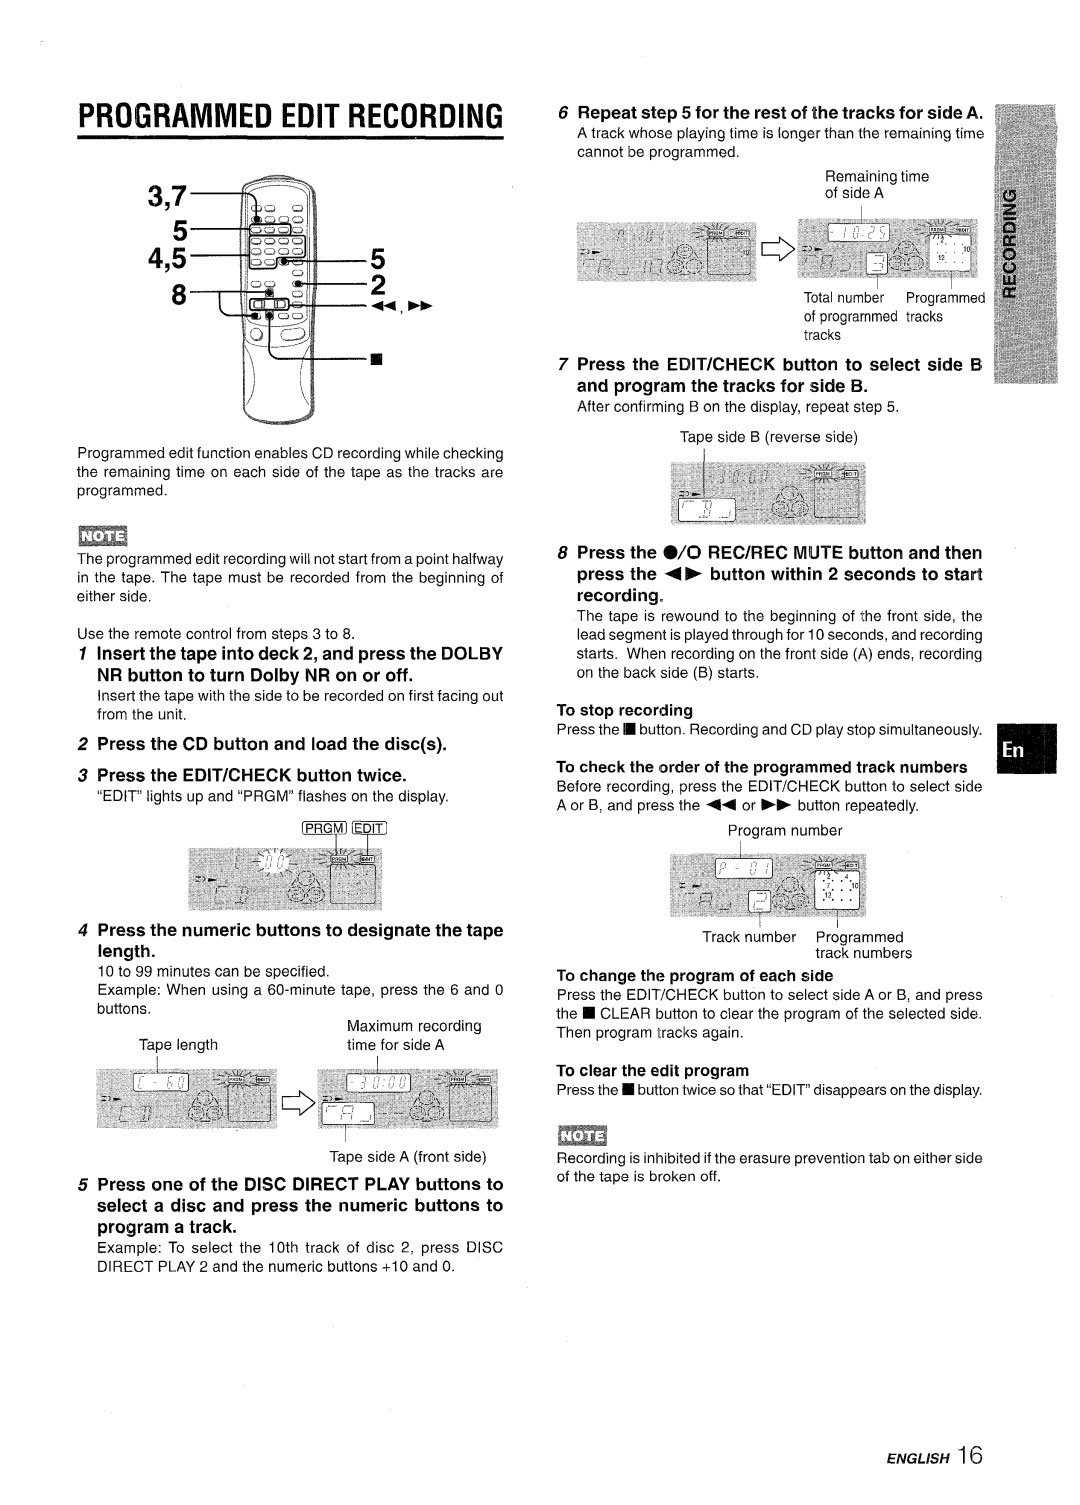 Aiwa CX-NV8000 manual Programmed Edit Recording, 4,55, Press the EDIT/CHECK button twice, To stop recording 